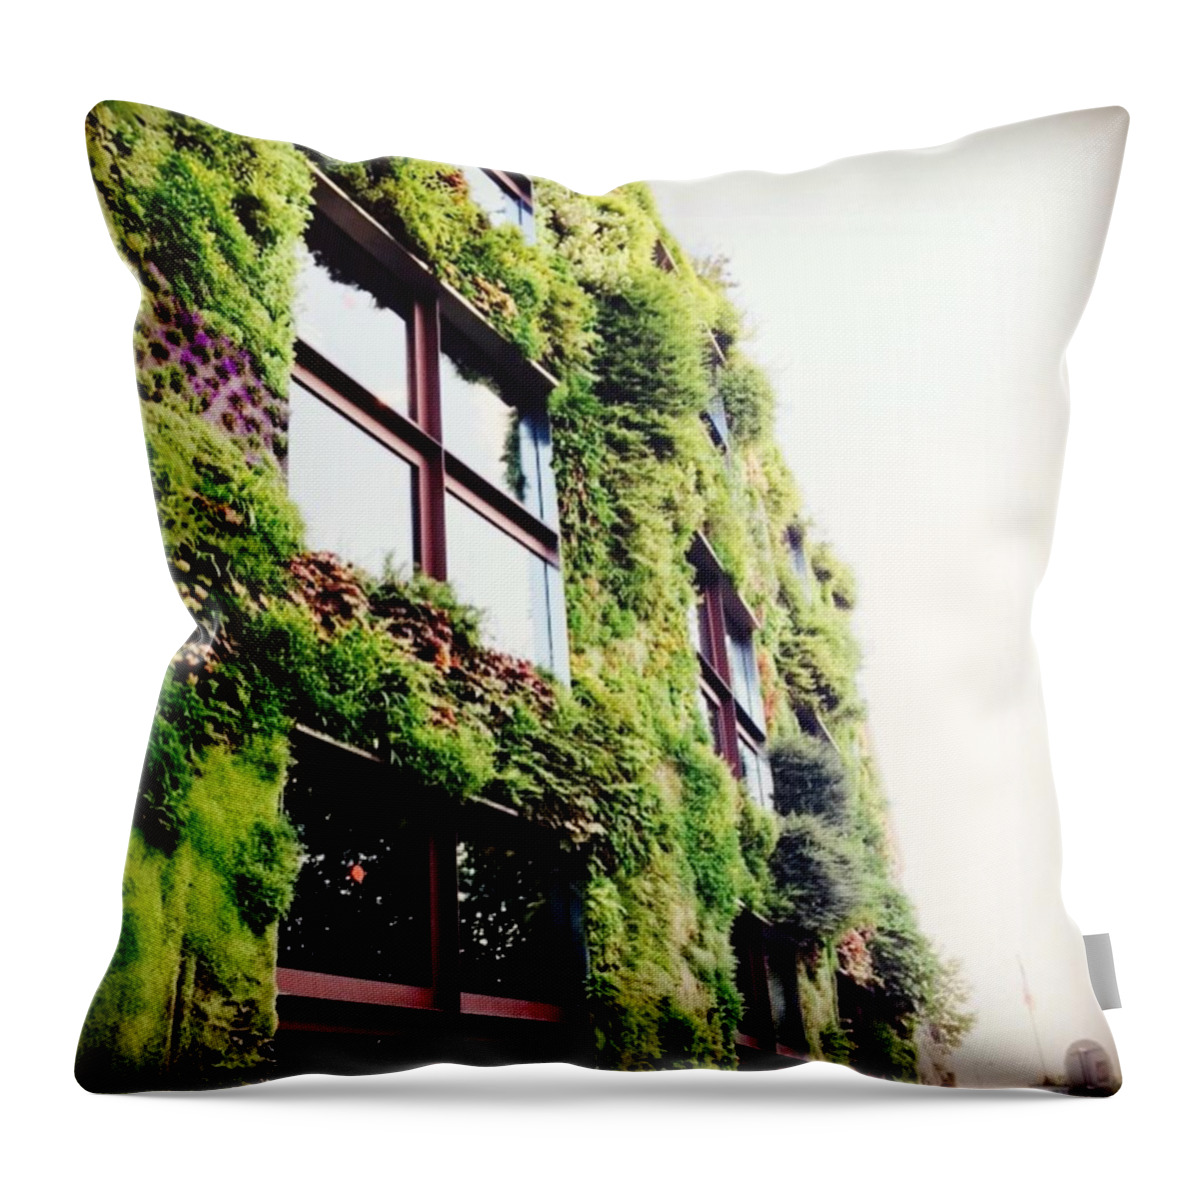 Paris Throw Pillow featuring the photograph #nice Building #paris #environment by Christian Trejo